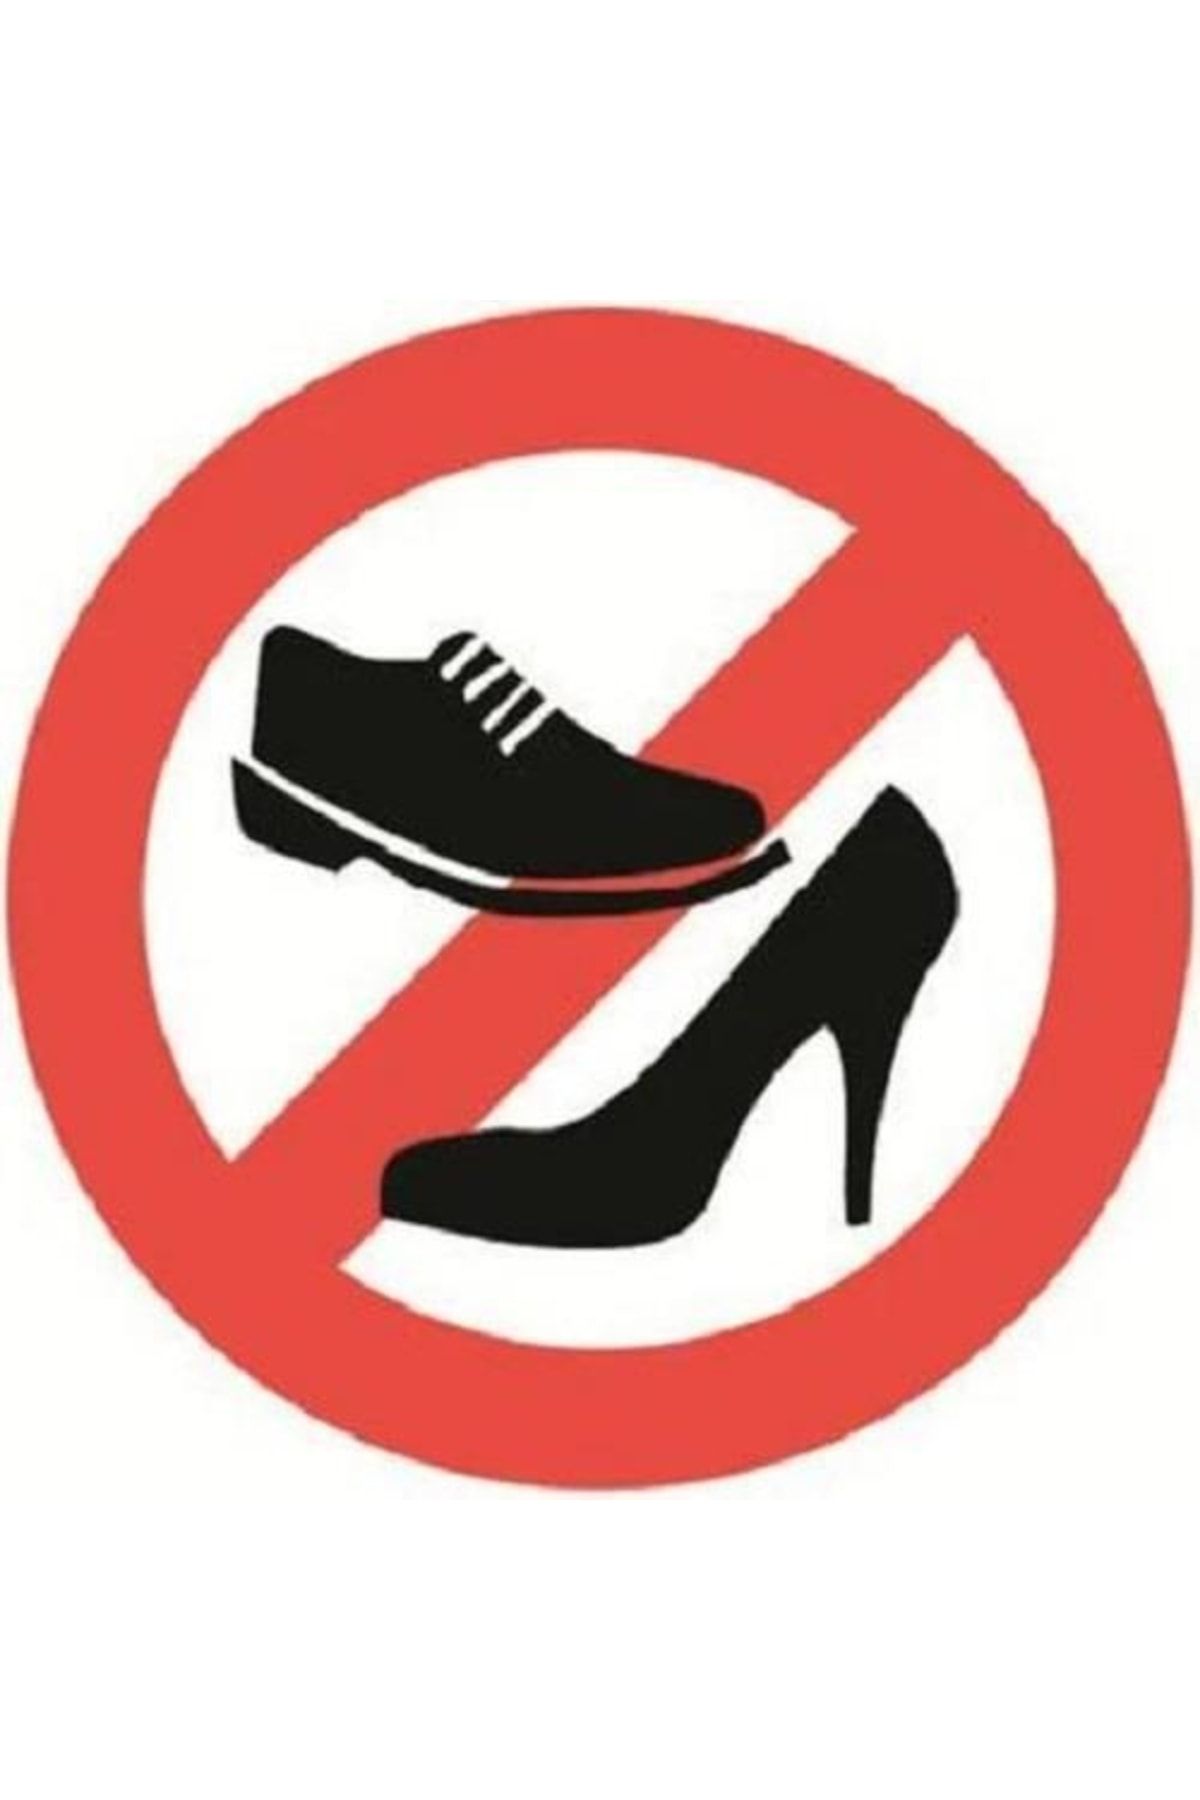 В обуви запрещено. Знак без обуви. Знак в обуви запрещено. Вход в обуви запрещен. Бессменной обуви или без сменной обуви